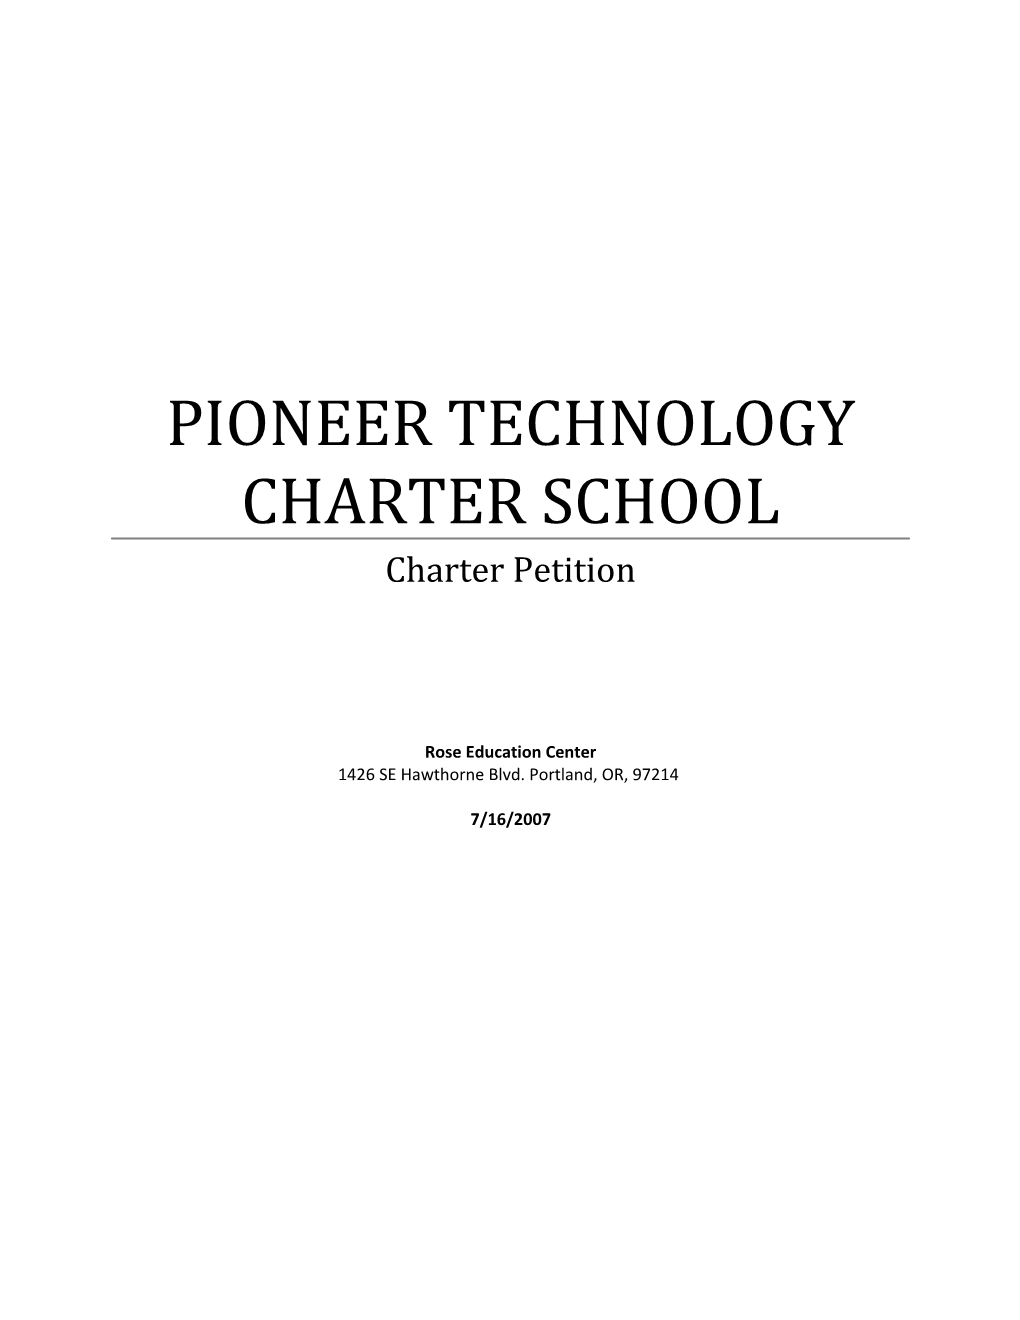 Pioneer Technology Charter School